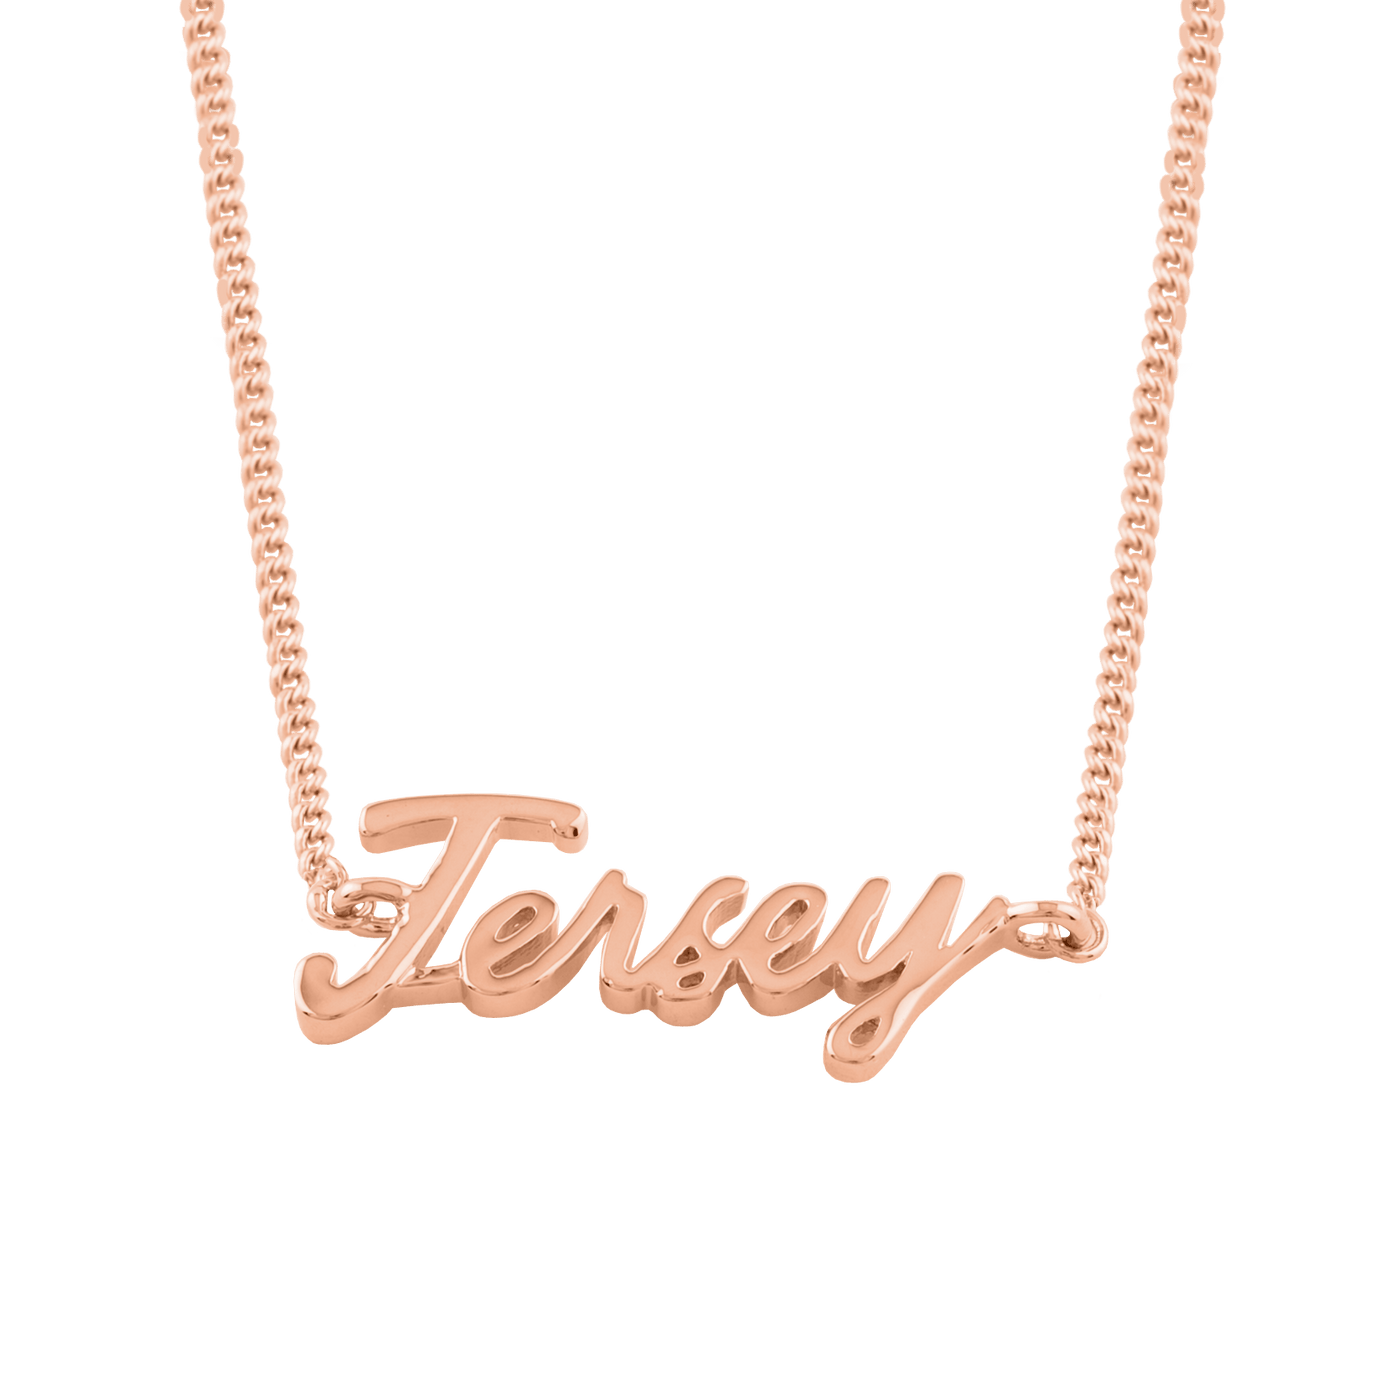 Jersey Signature Necklace